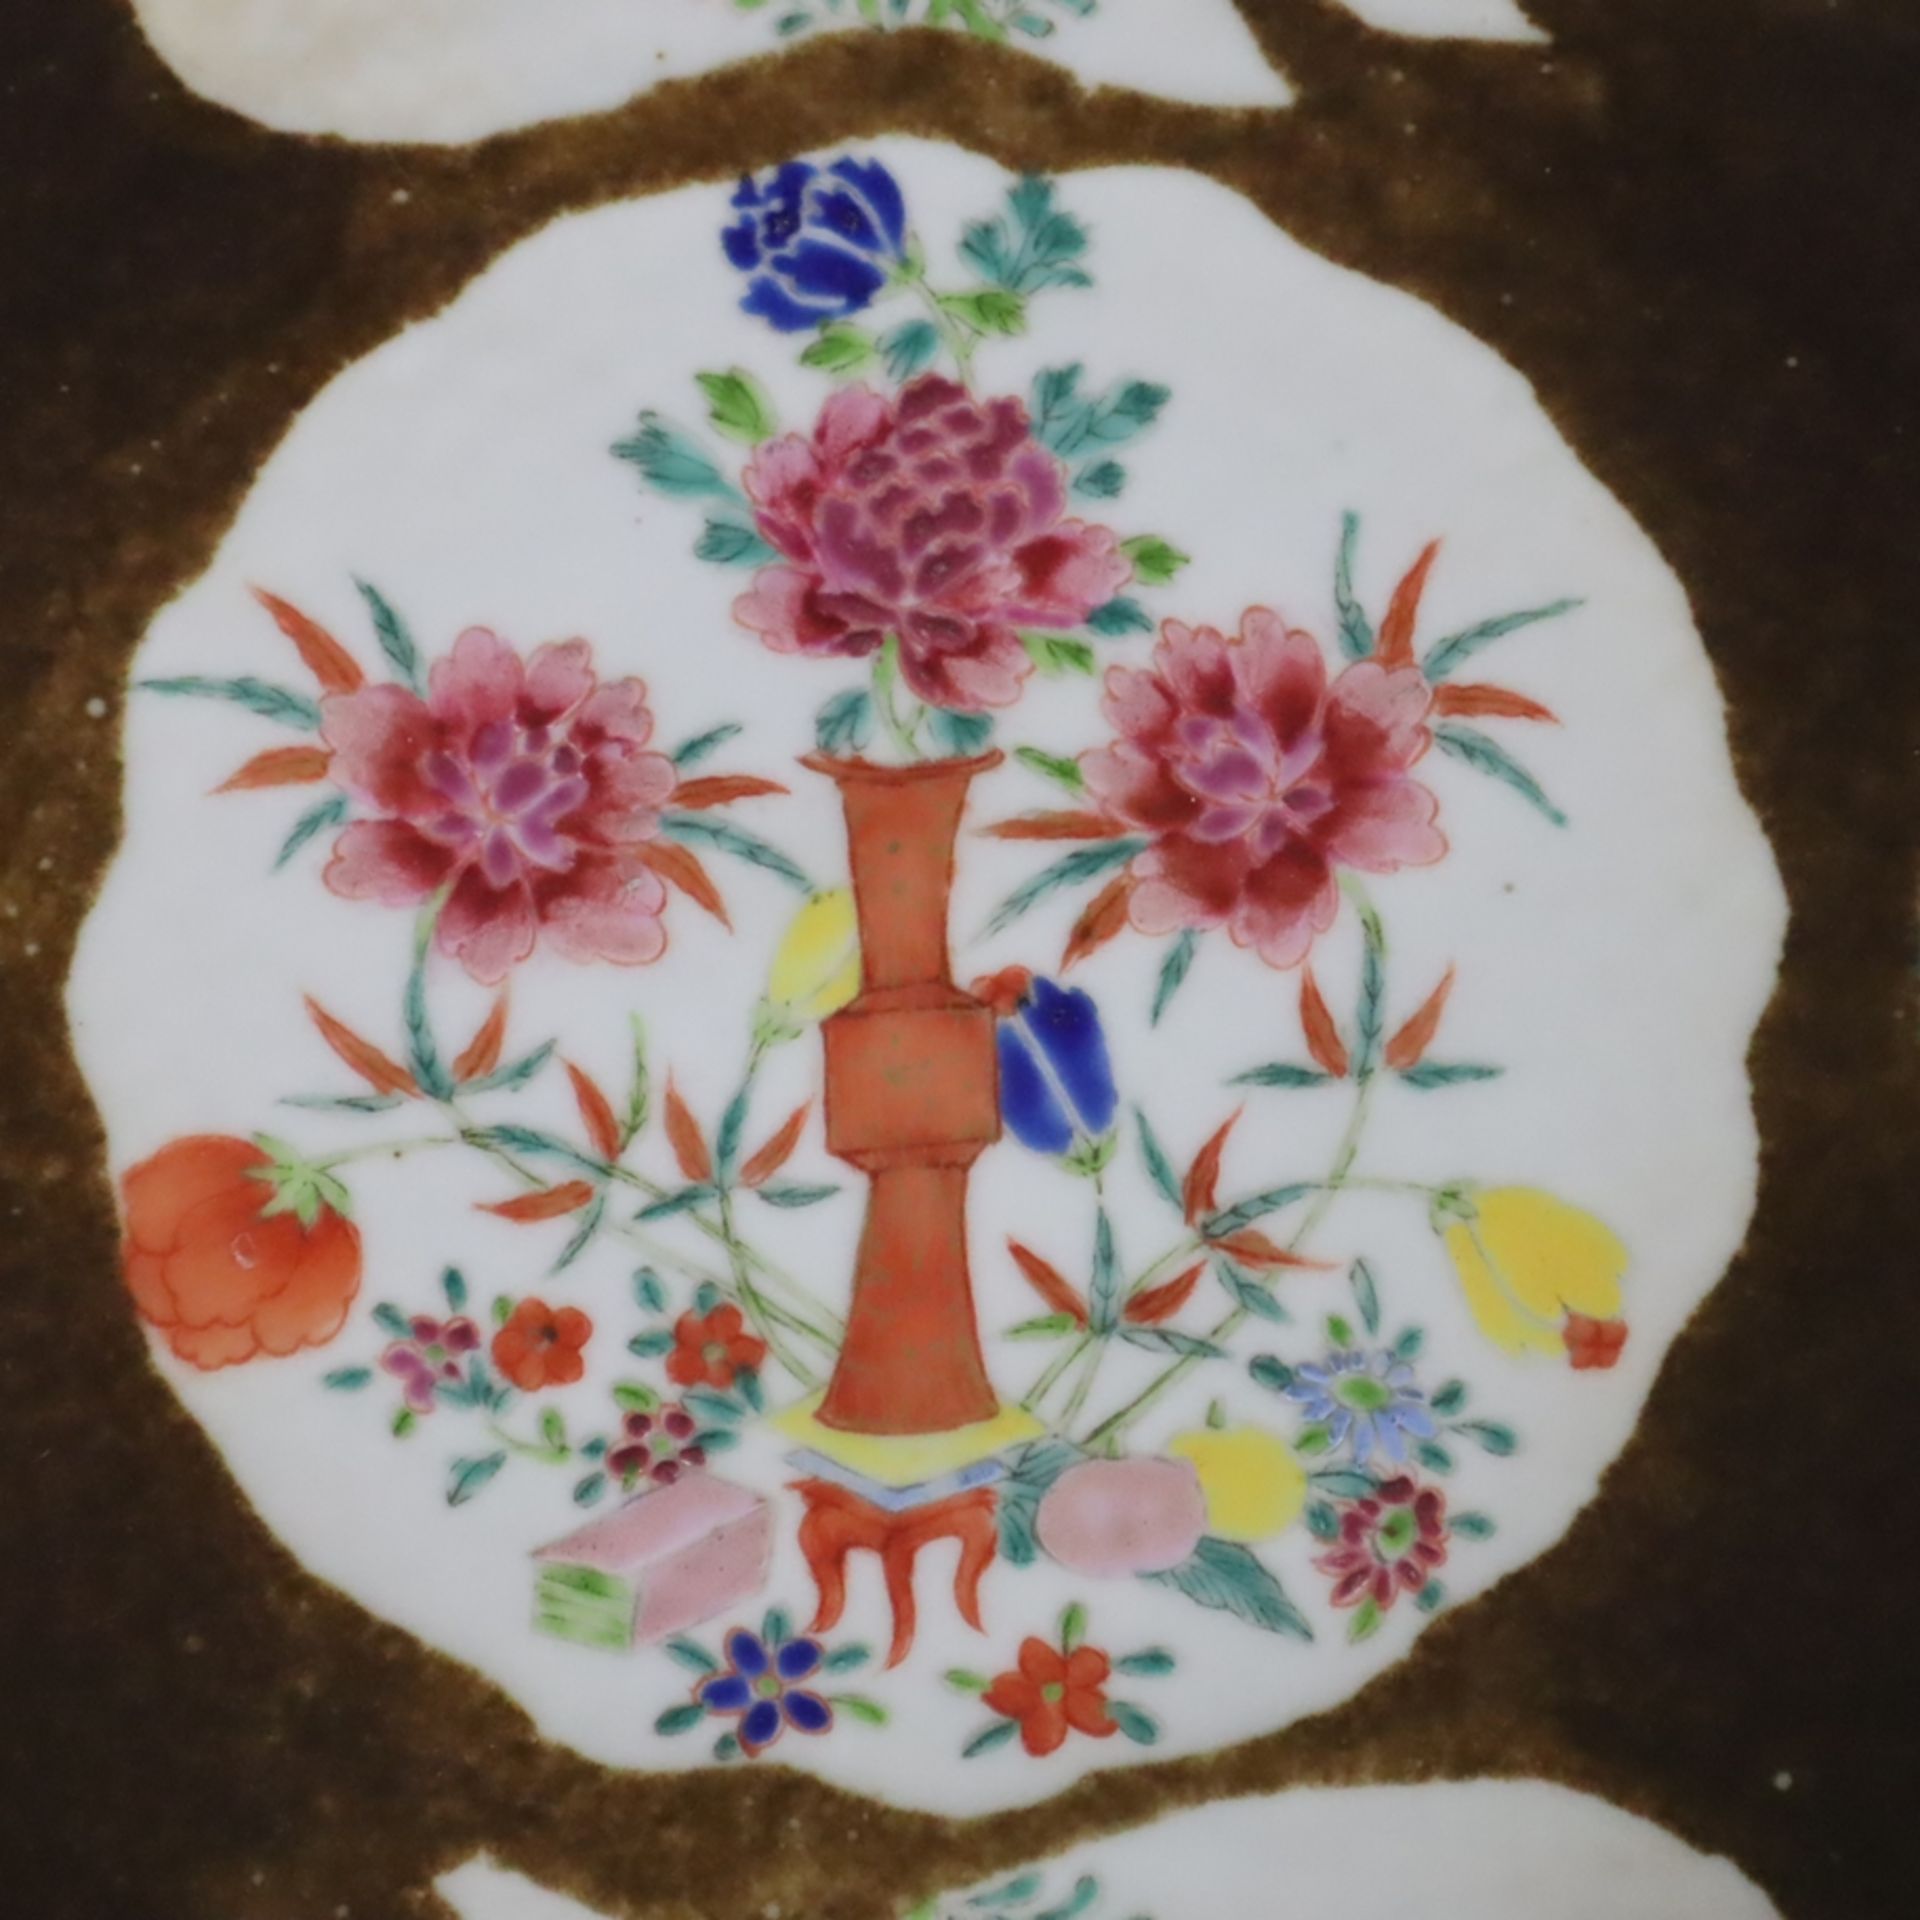 Große gemuldete Batavia-/Famille rose-Rundplatte - China, Qing-Dynastie, Porzellan, braun glasiert, - Image 3 of 7